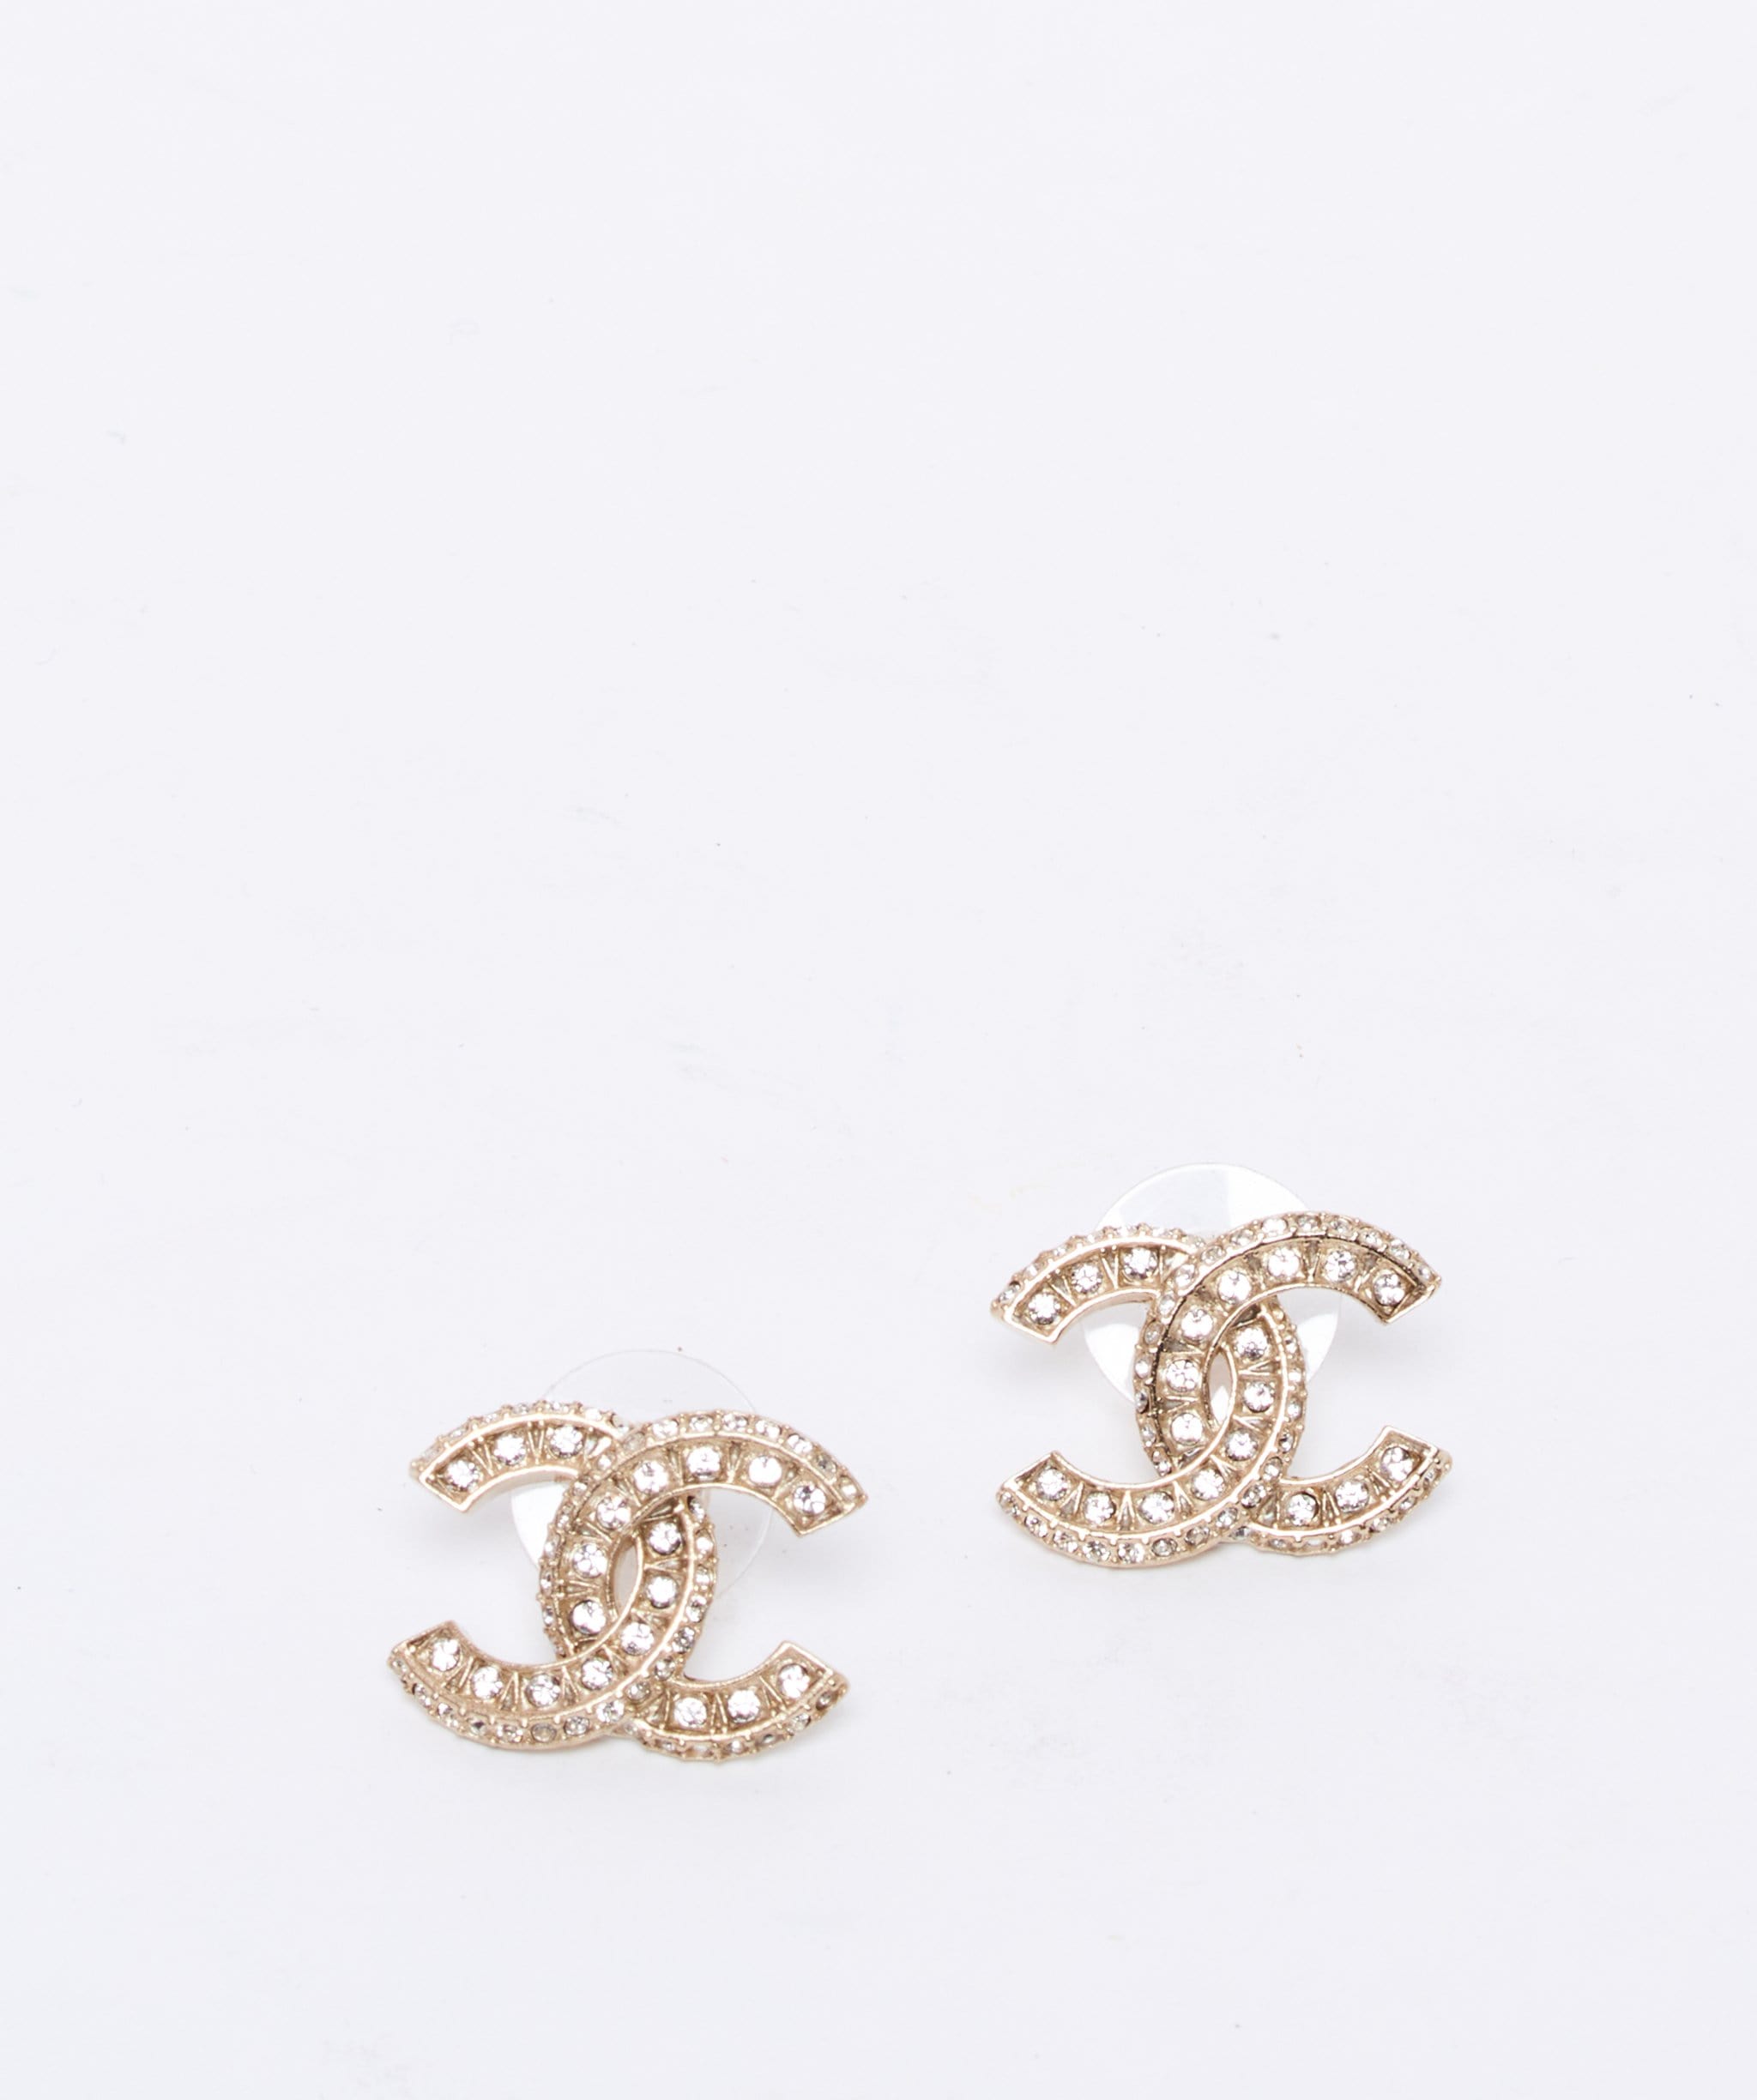 Chanel ingrained crystal CC stud earrings